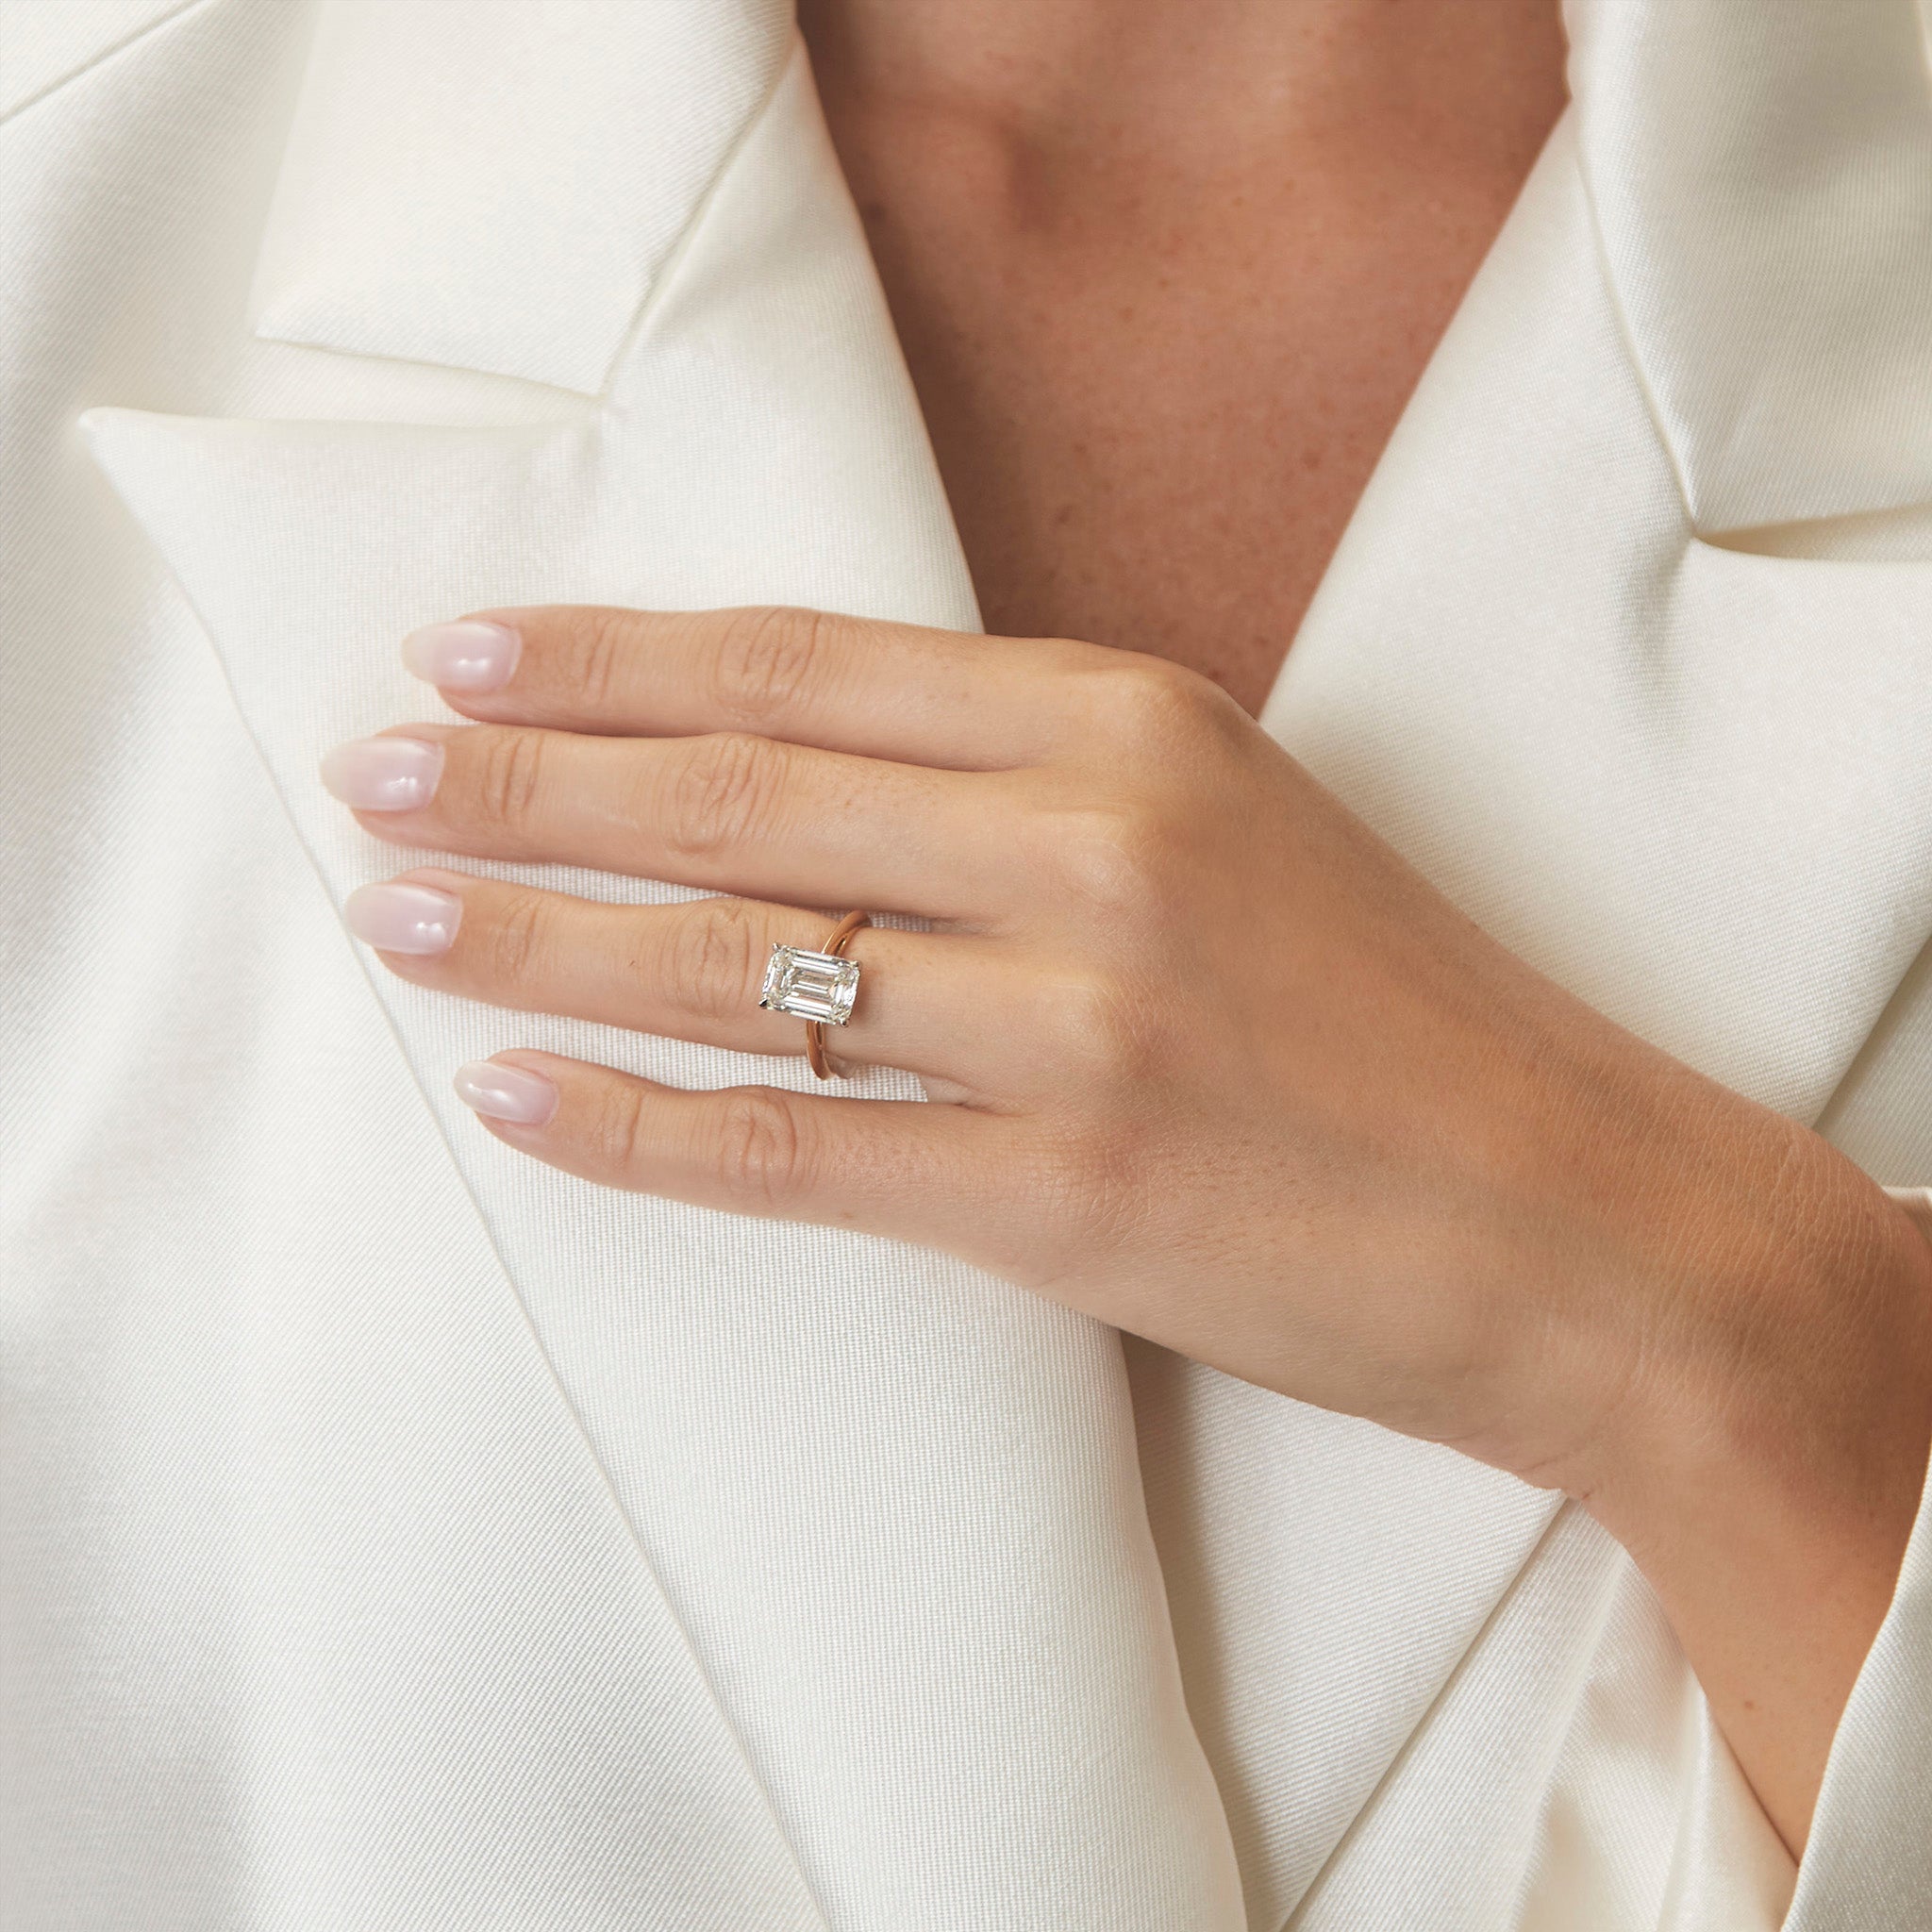 Florina Emerald: Emerald Cut Solitaire Engagement Ring with a Thin Band |  Ken & Dana Design